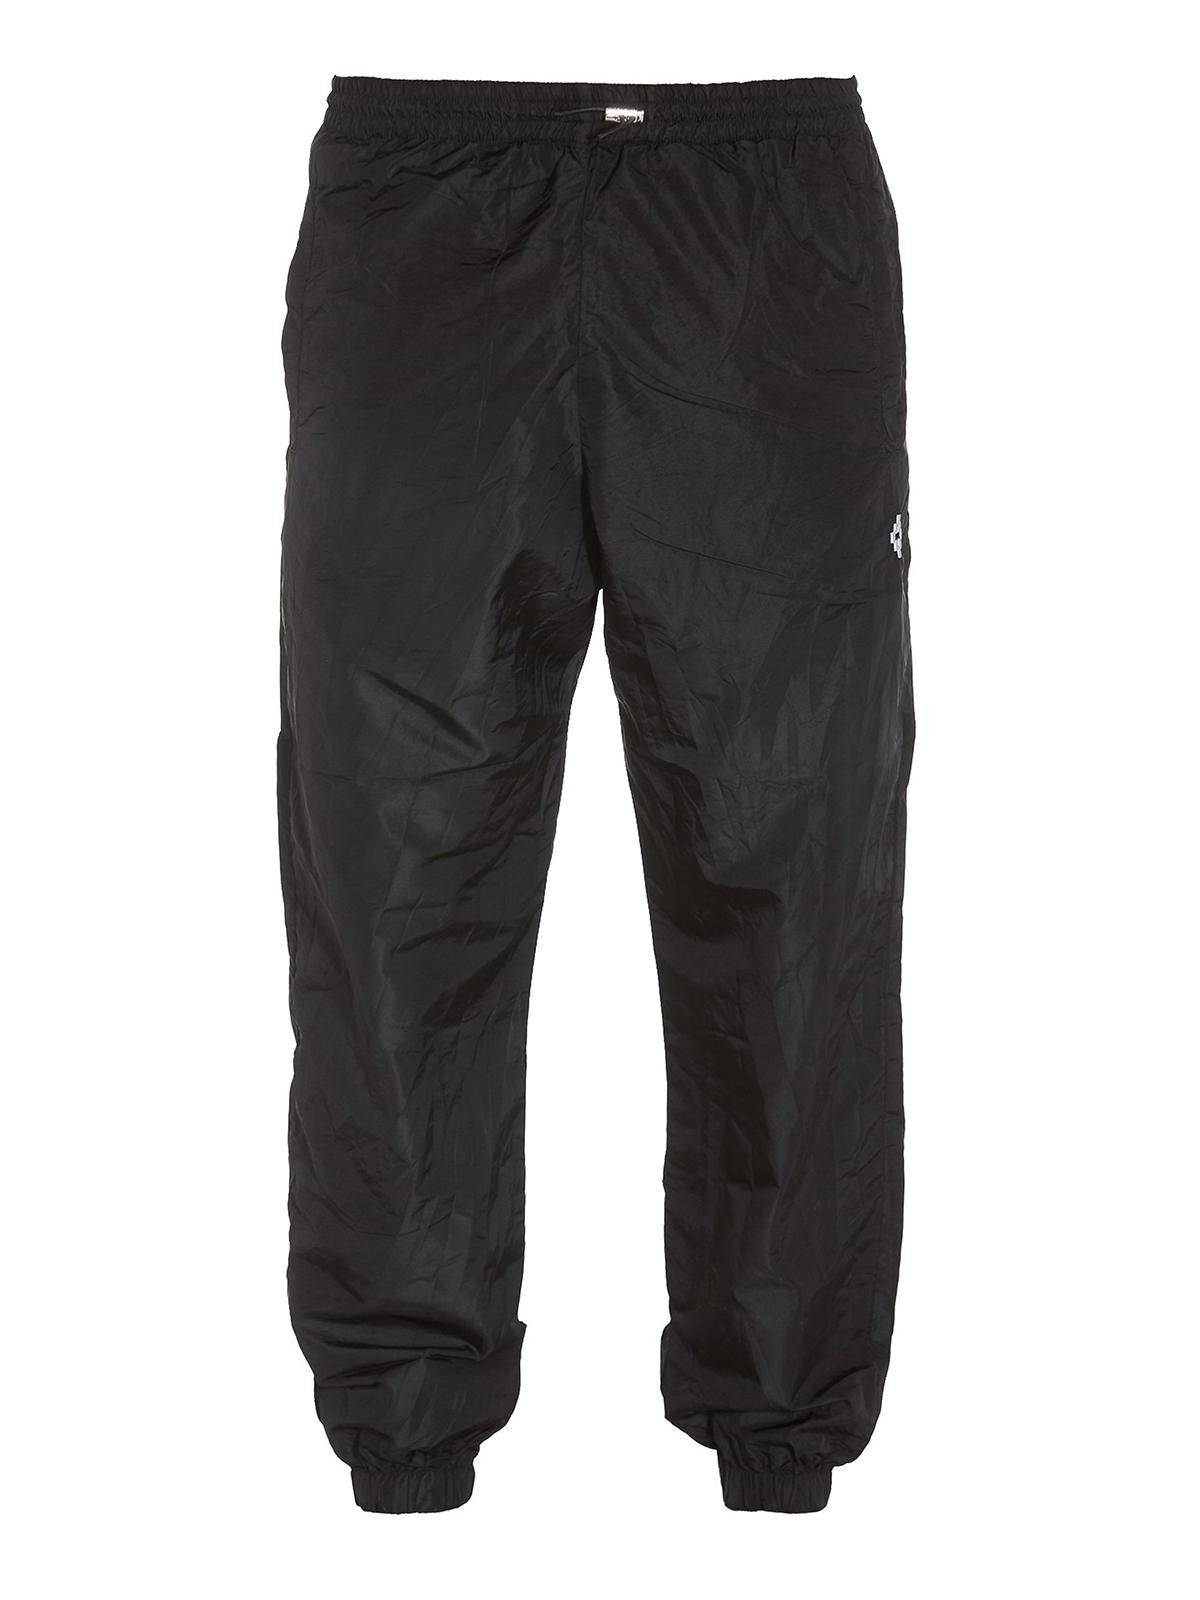 Marcelo Burlon Synthetic Nylon Blend jogging Pants in Black for Men - Lyst